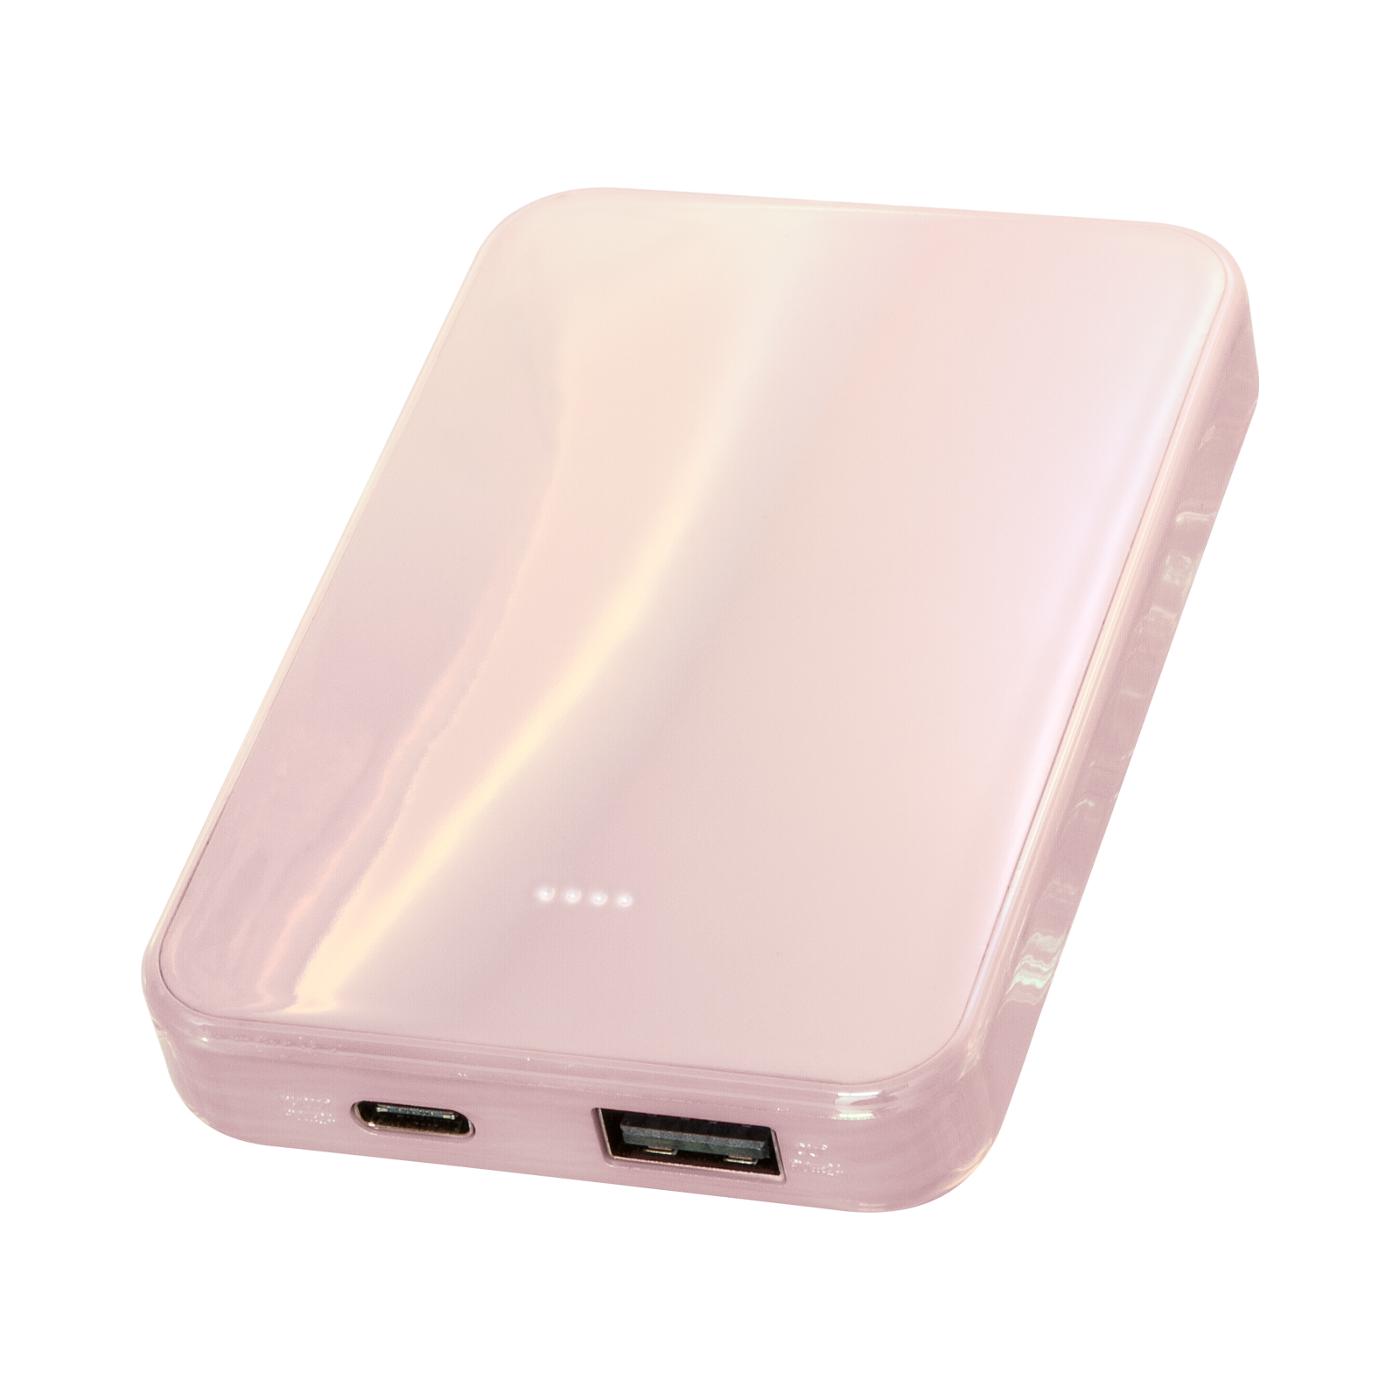 Helix TurboVolt 5,000 mAh Portable Power Bank - Pink; image 2 of 2